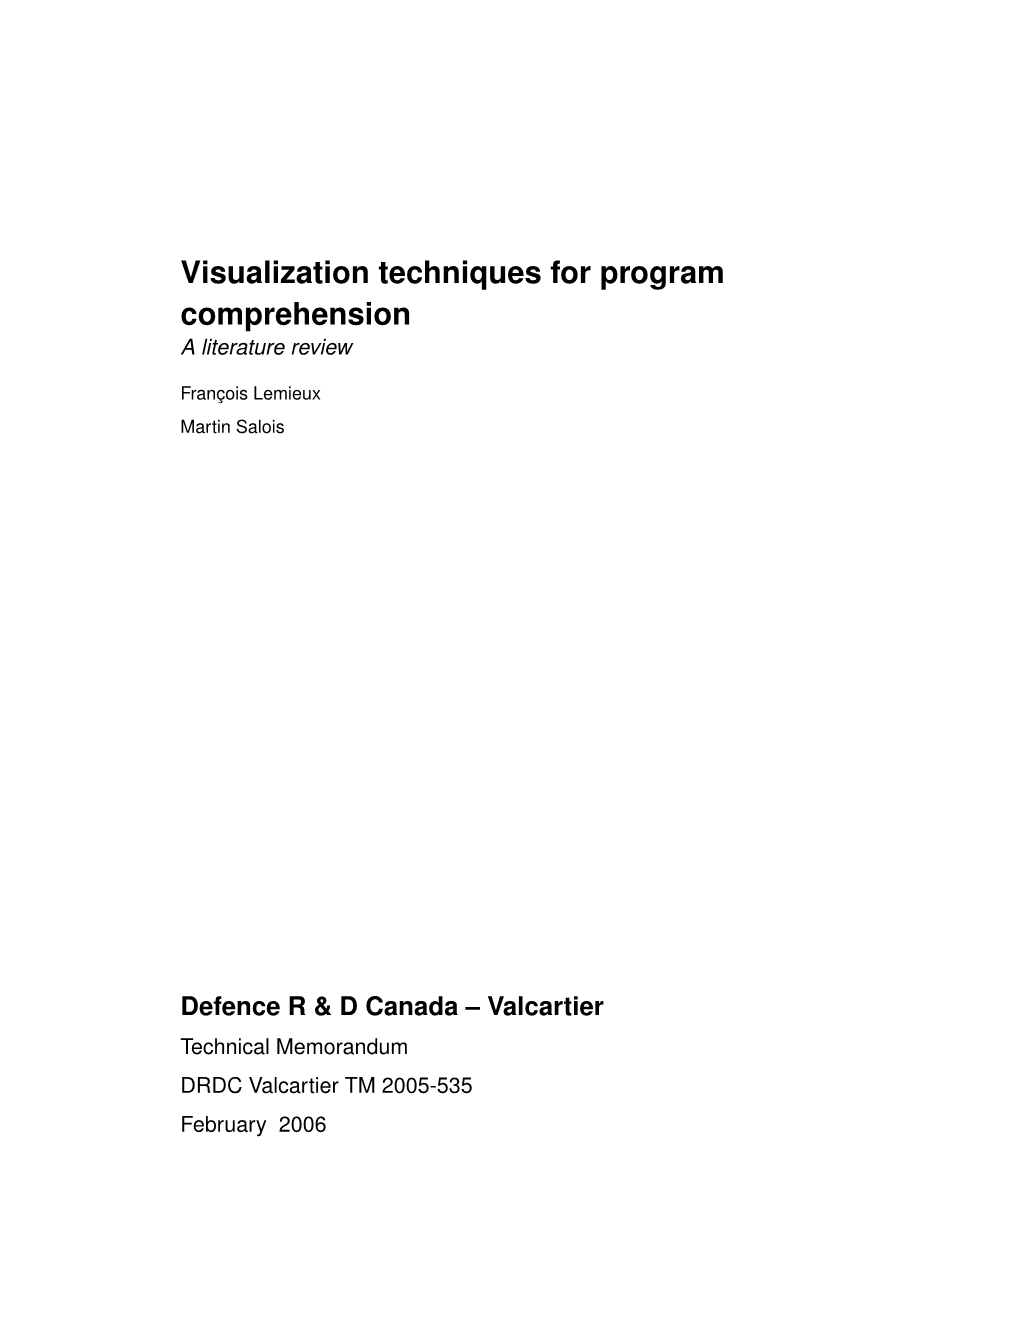 Visualization Techniques for Program Comprehension a Literature Review